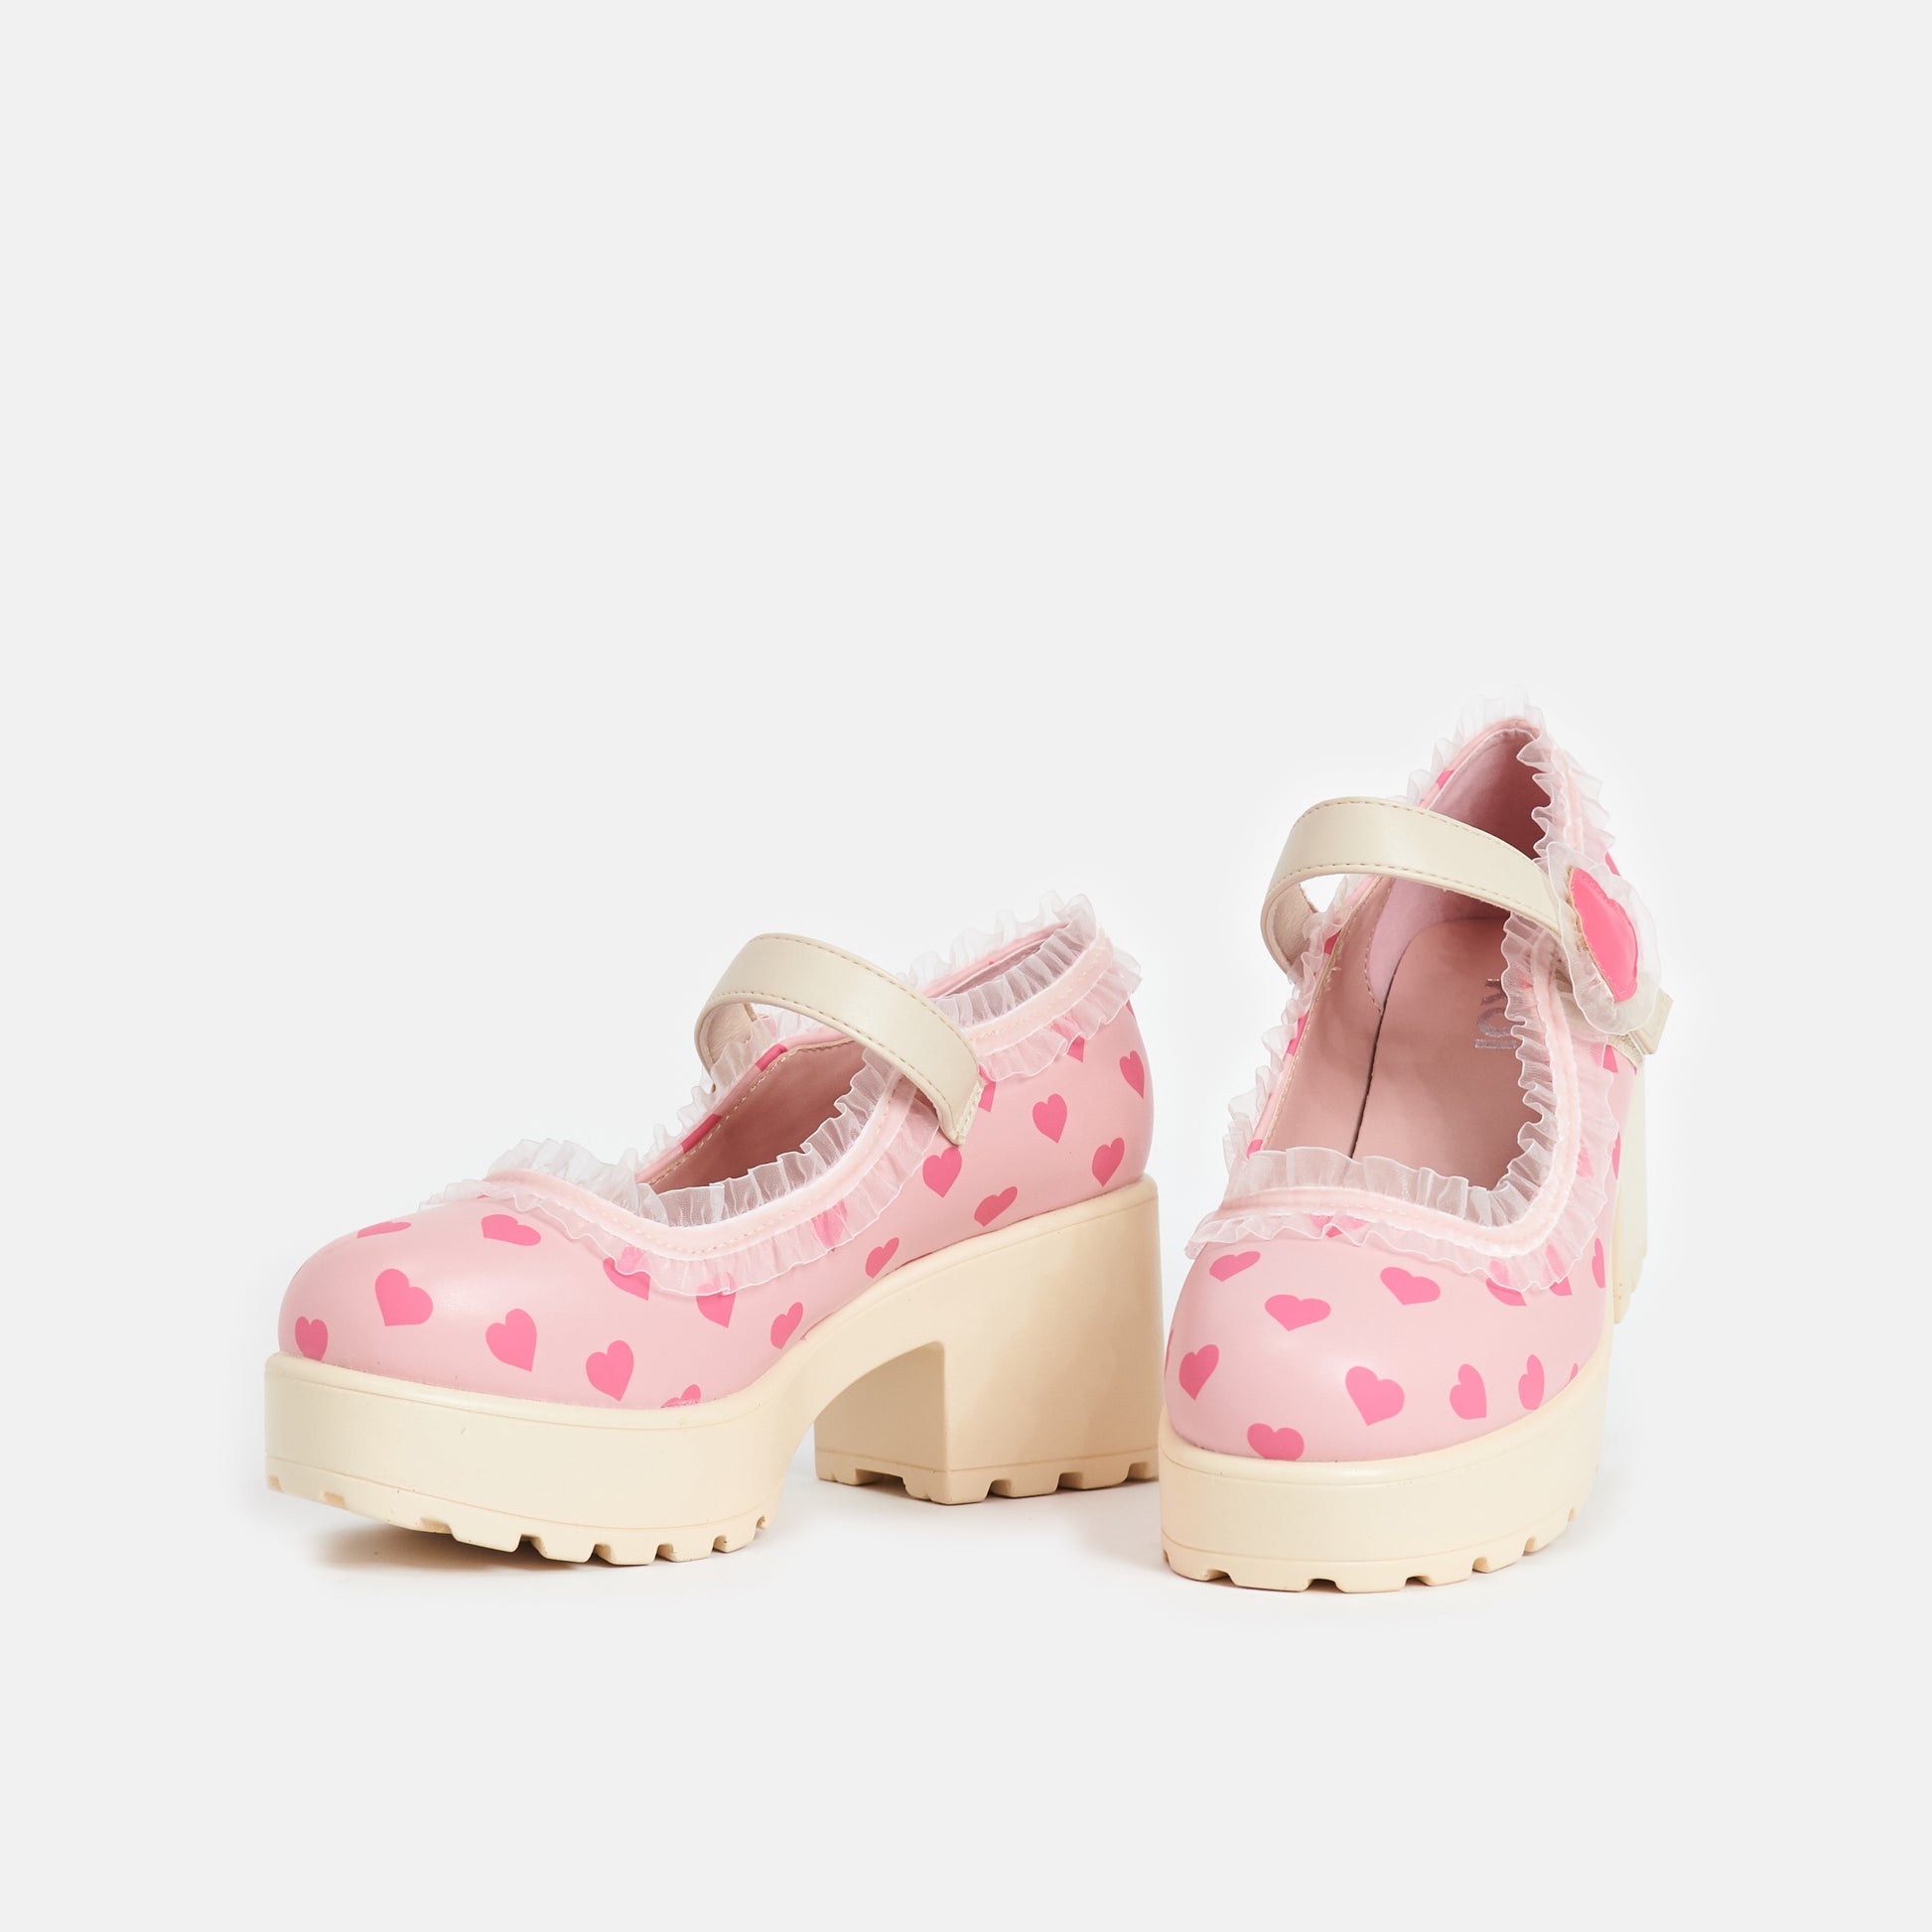 Tira Mary Jane Shoes 'Melanie Sweetheart Edition' - Mary Janes - KOI Footwear - Beige - Three-Quarter View